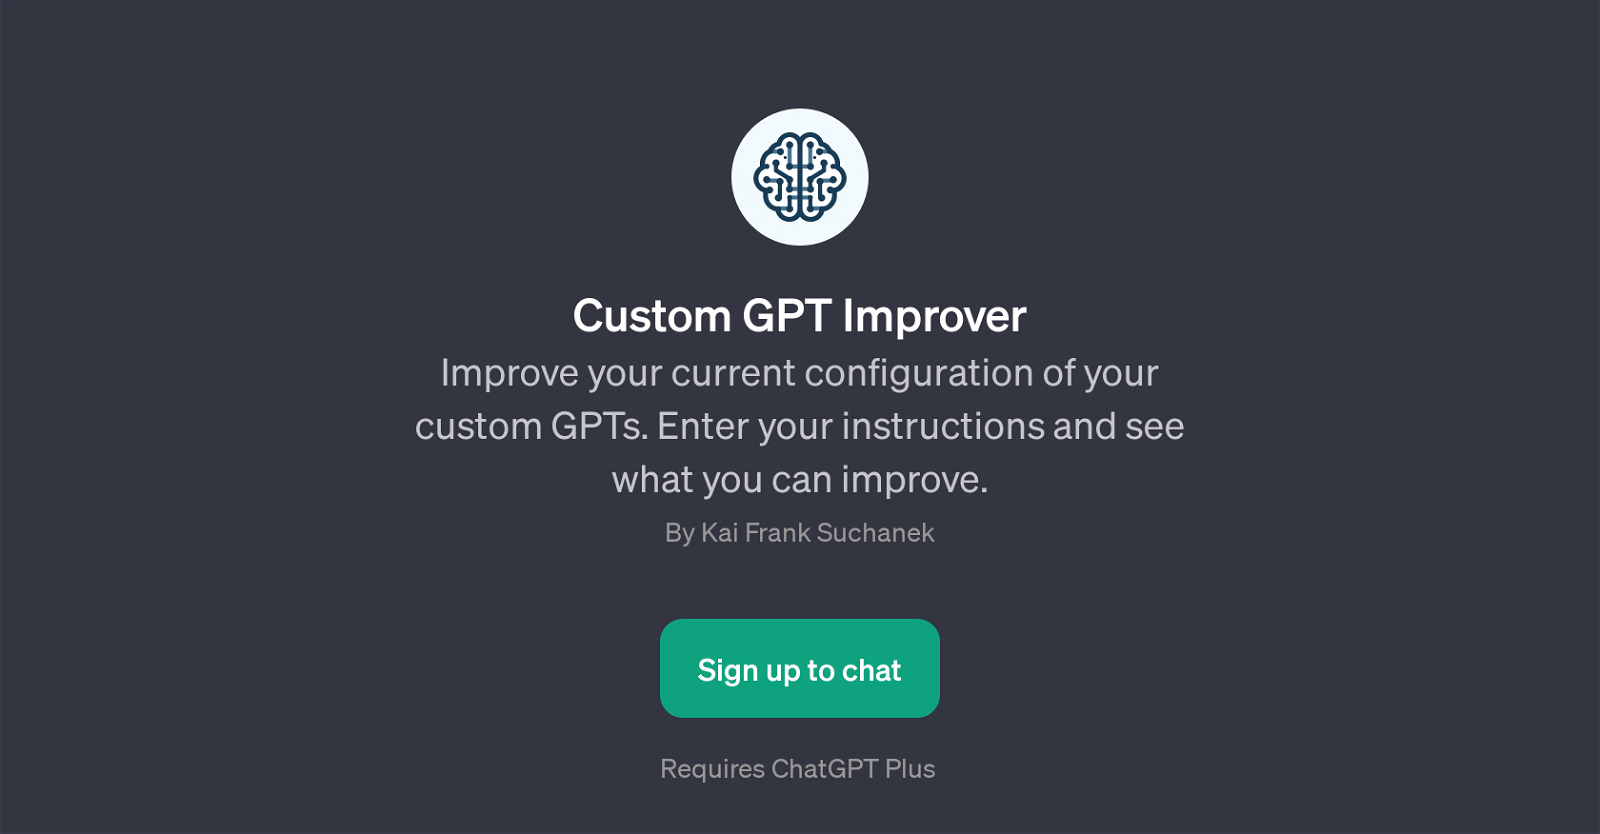 Custom GPT Improver website